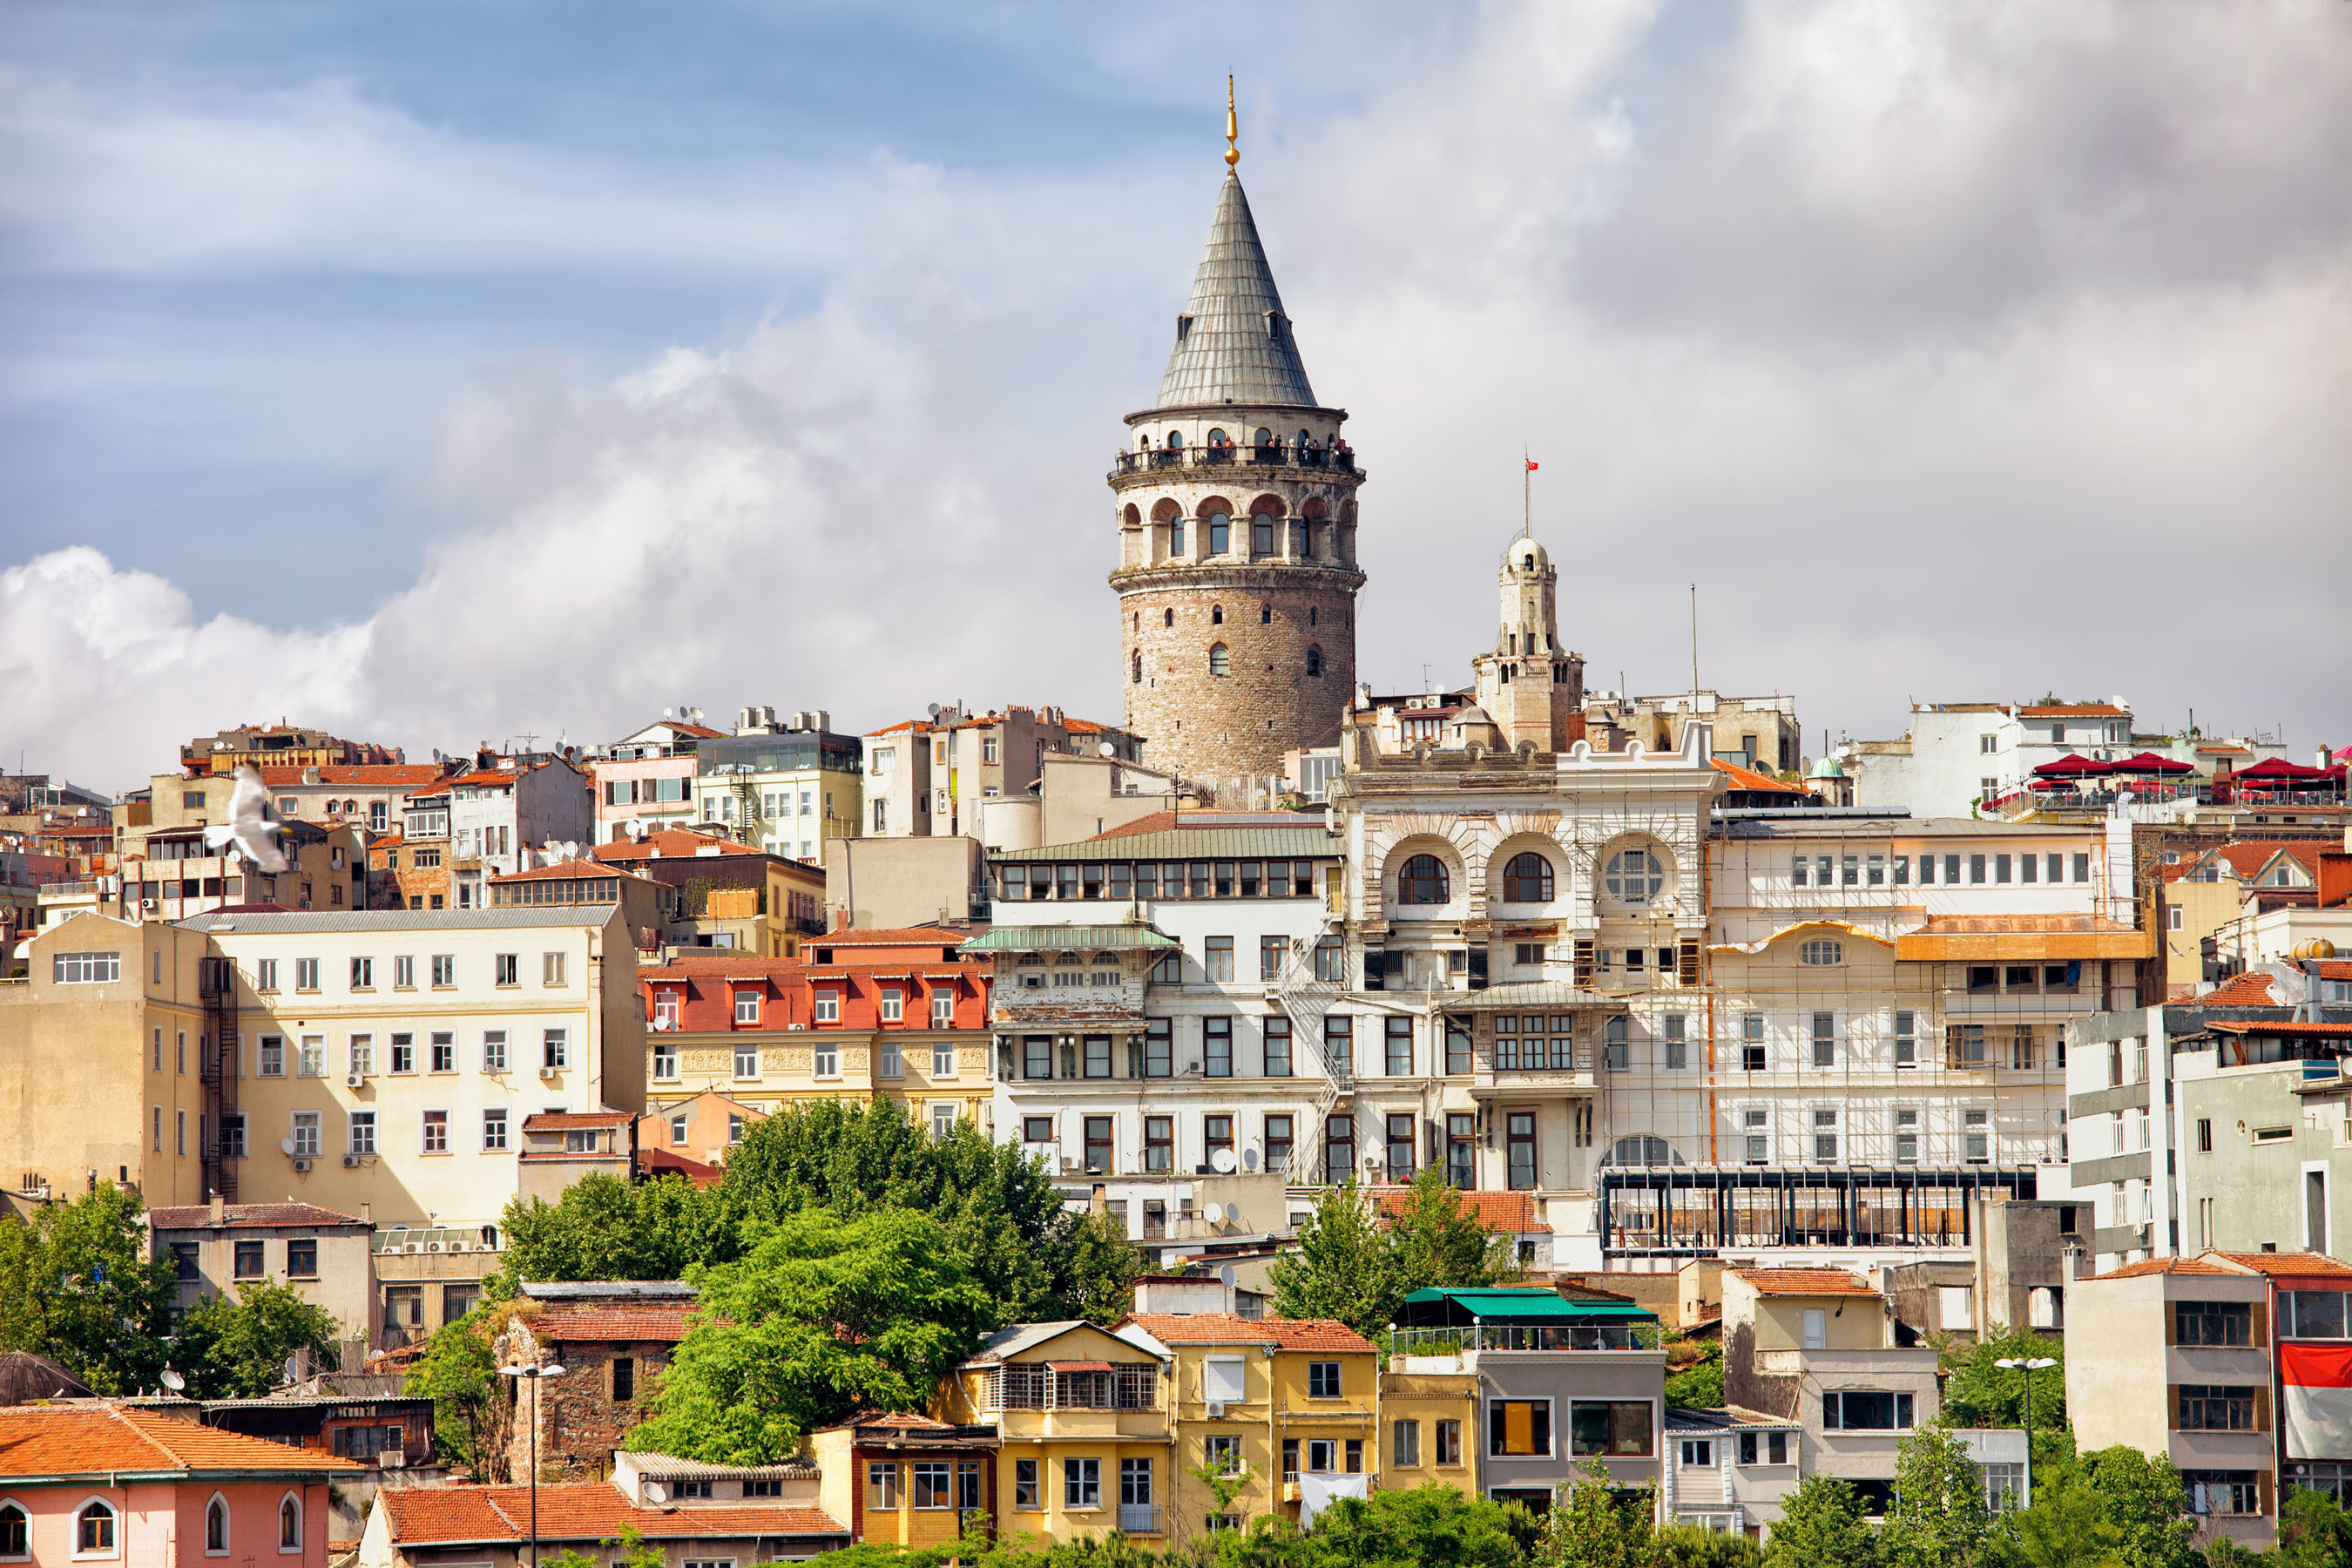 Istanbul’s Galata district, featuring the Galata Tower. (PRNewsFoto/Crystal Cruises)